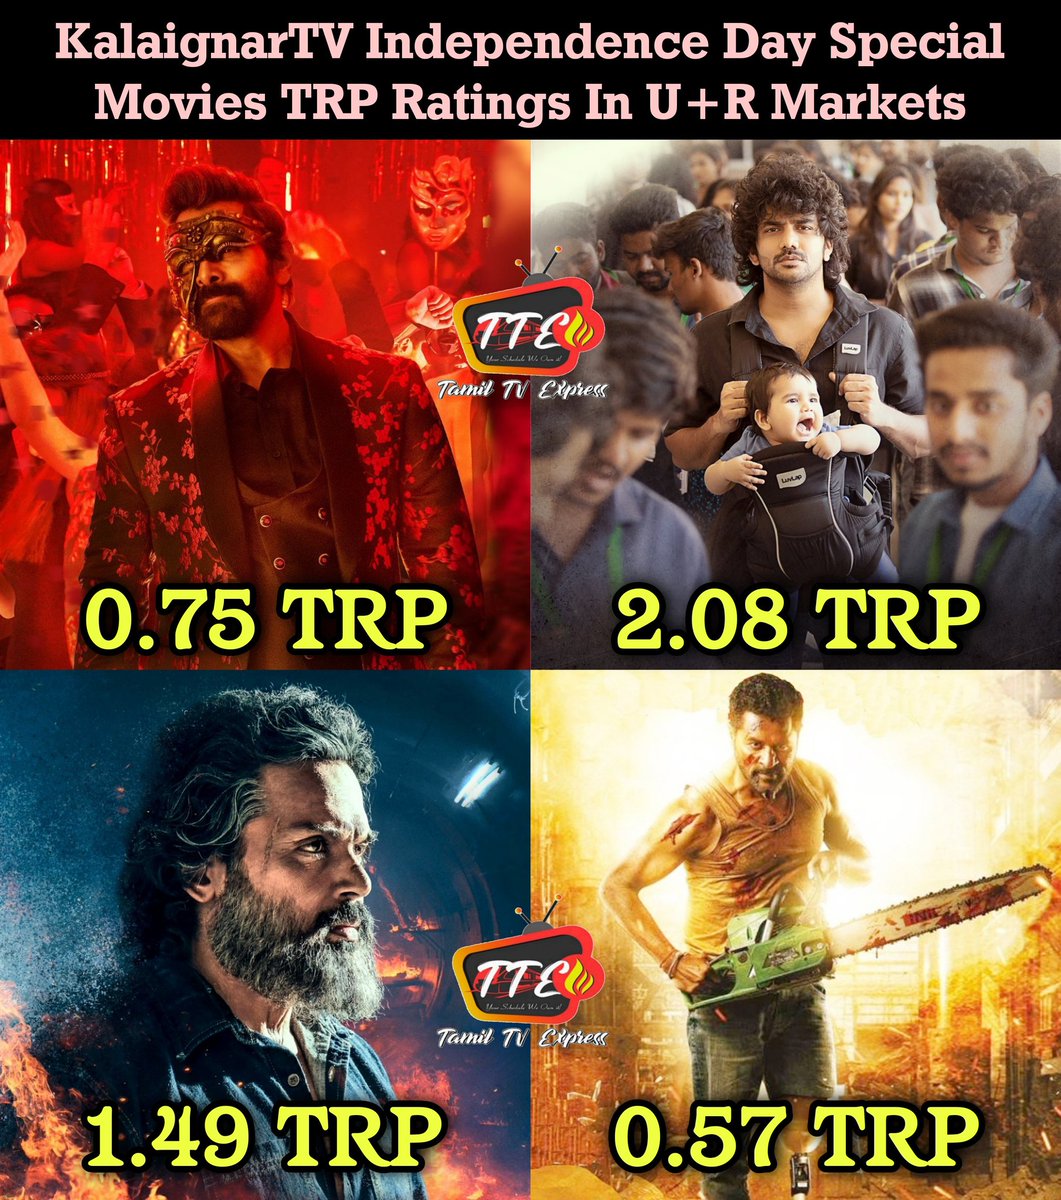 #KalaignarTV Independence Day Special Movies TRP Ratings

#Cobra -- 0.75
#Dada -- 2.08
#Sardar -- 1.49
#PoikkalKuthirai -- 0.57

#Vikram #Kavin #Karthi #PrabhuDeva